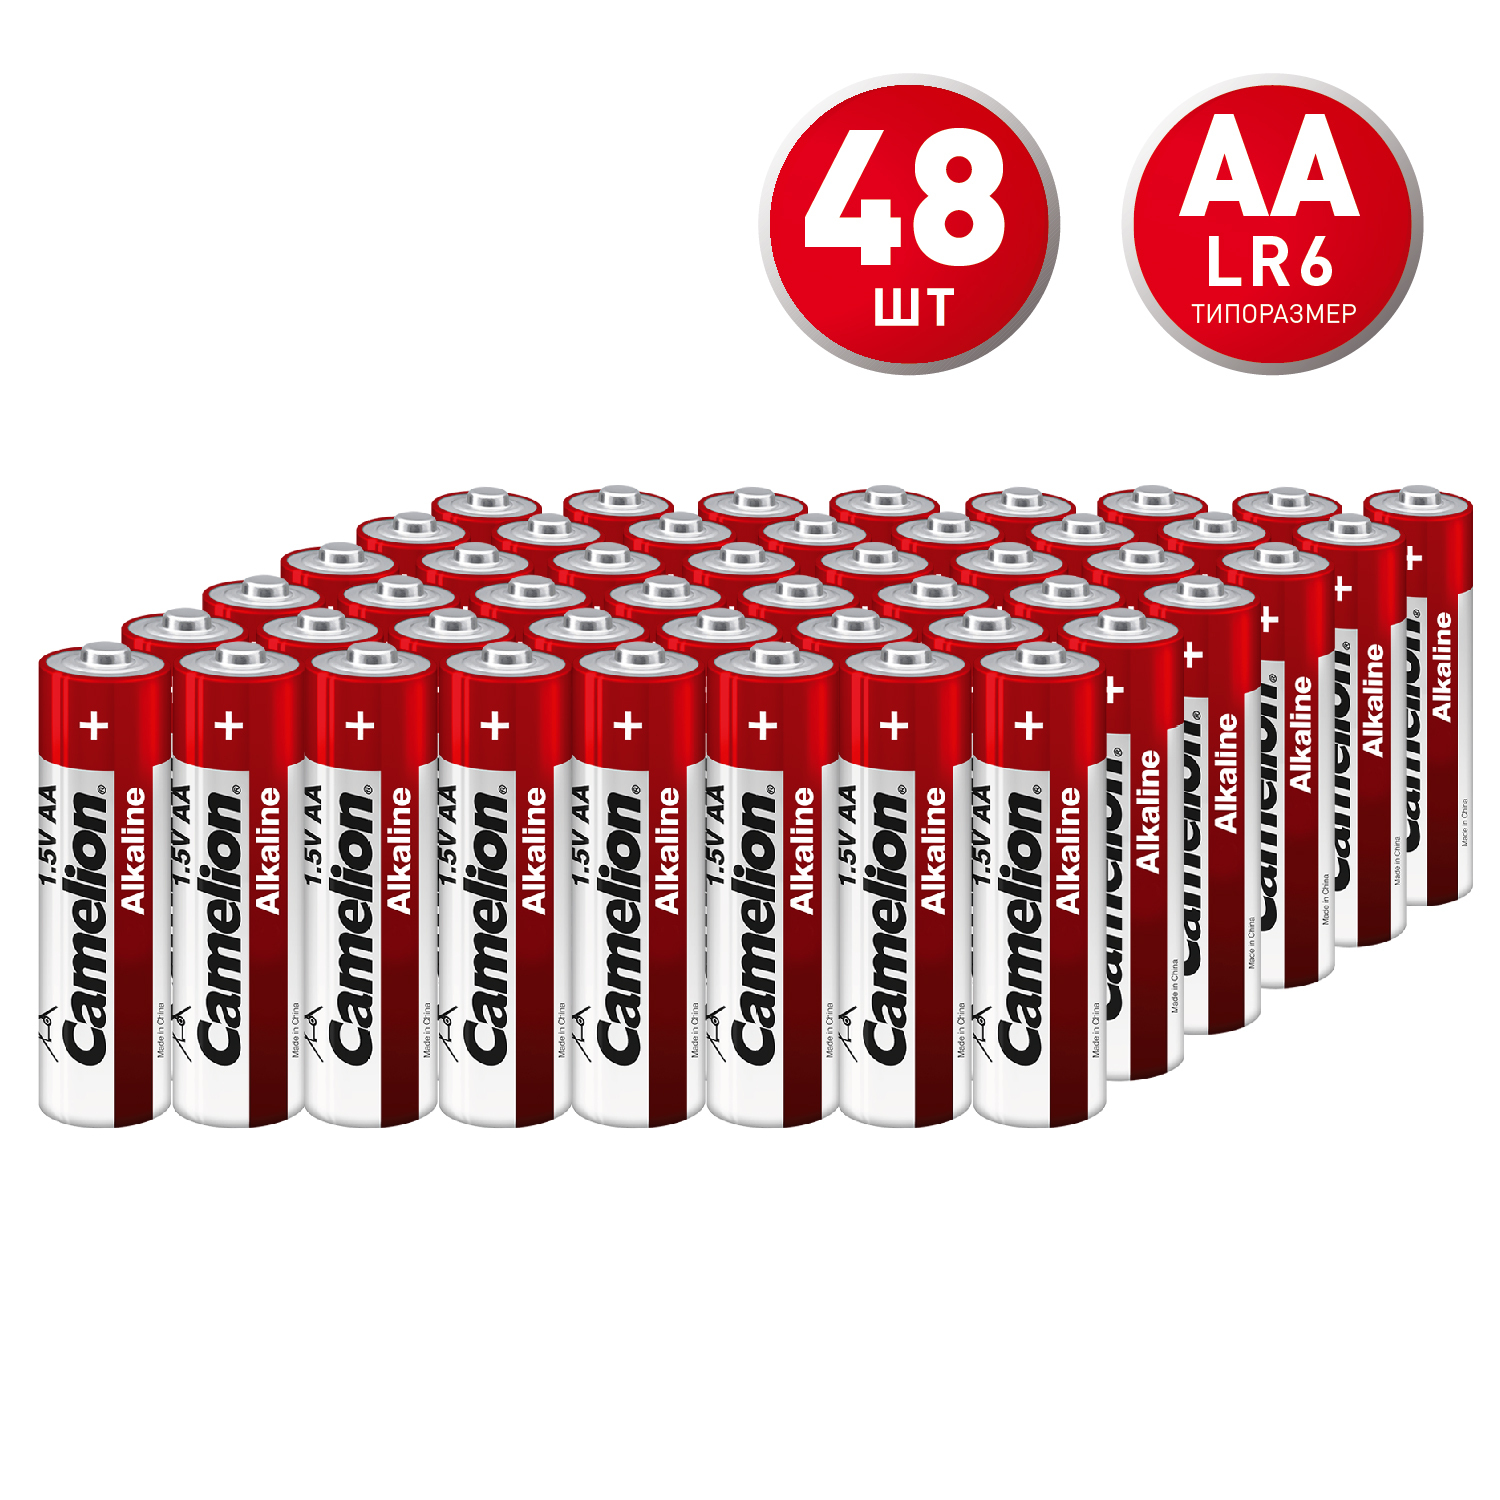 Батарейка Camelion Plus (LR6-BP4) АА пальчиковая LR6 1,5 В (48 шт.) батарейка camelion plus alkaline lr6 bp10 аа пальчиковая lr6 1 5 в 10 шт